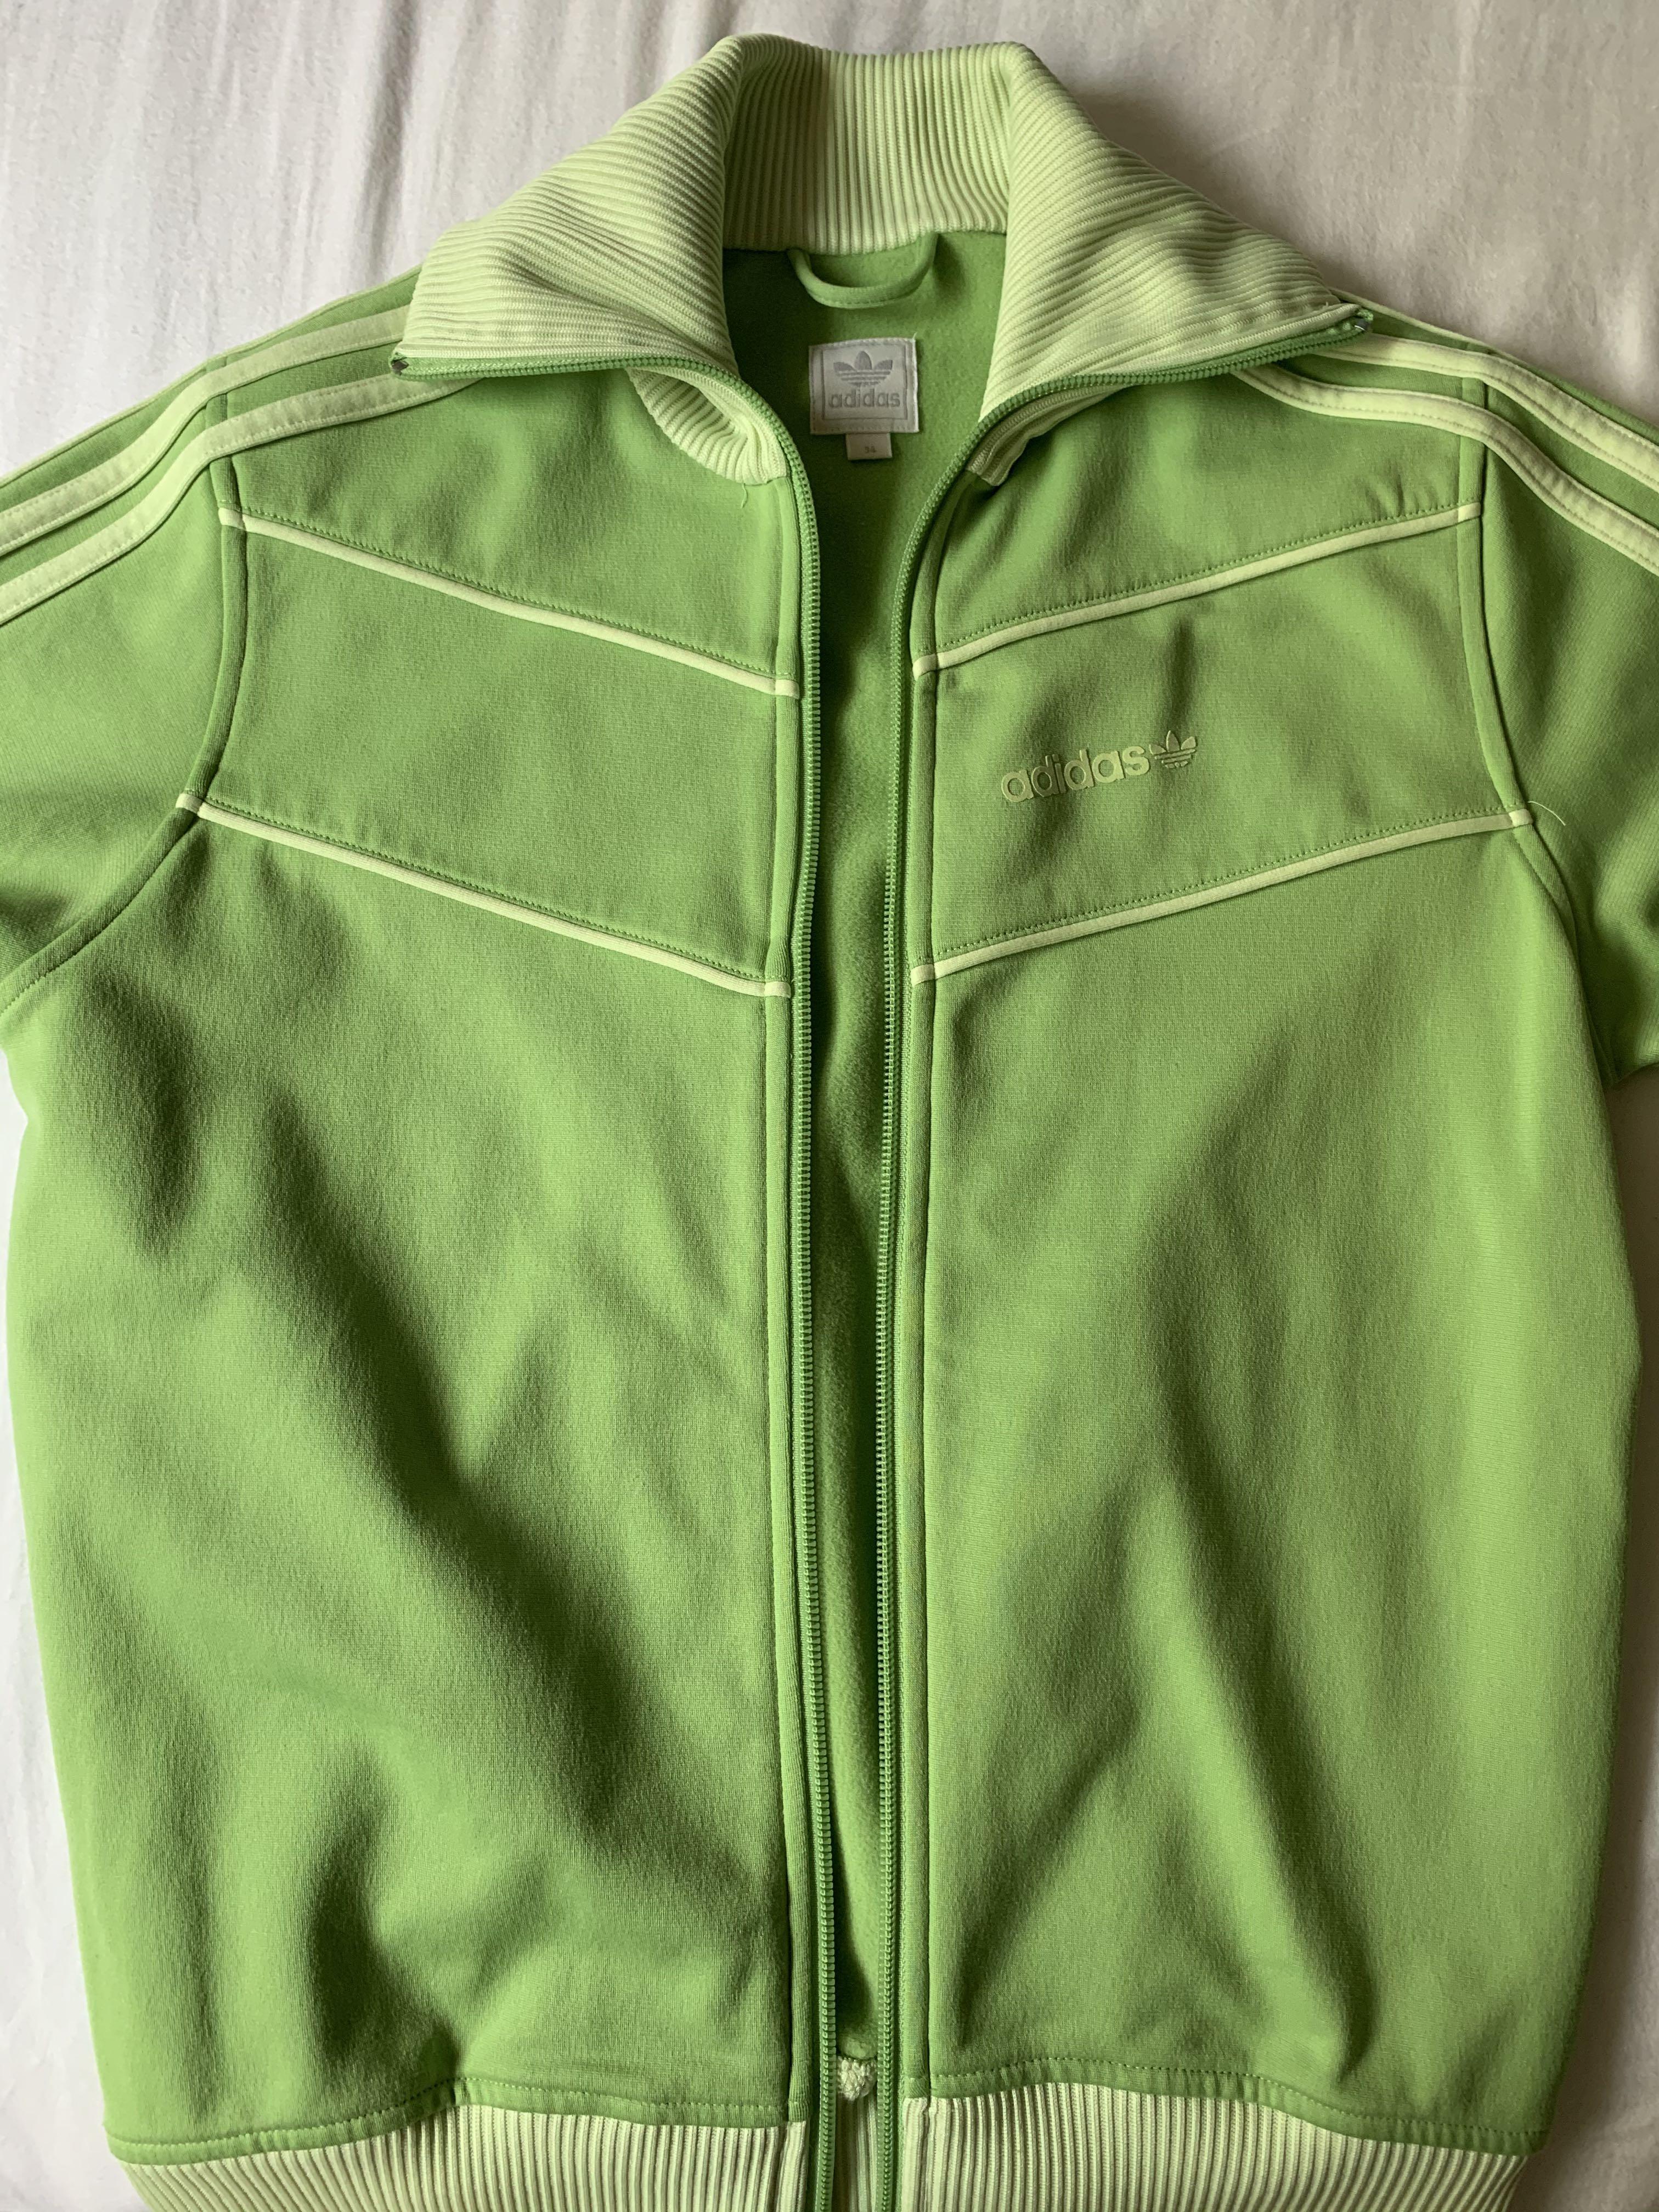 adidas vintage green jacket